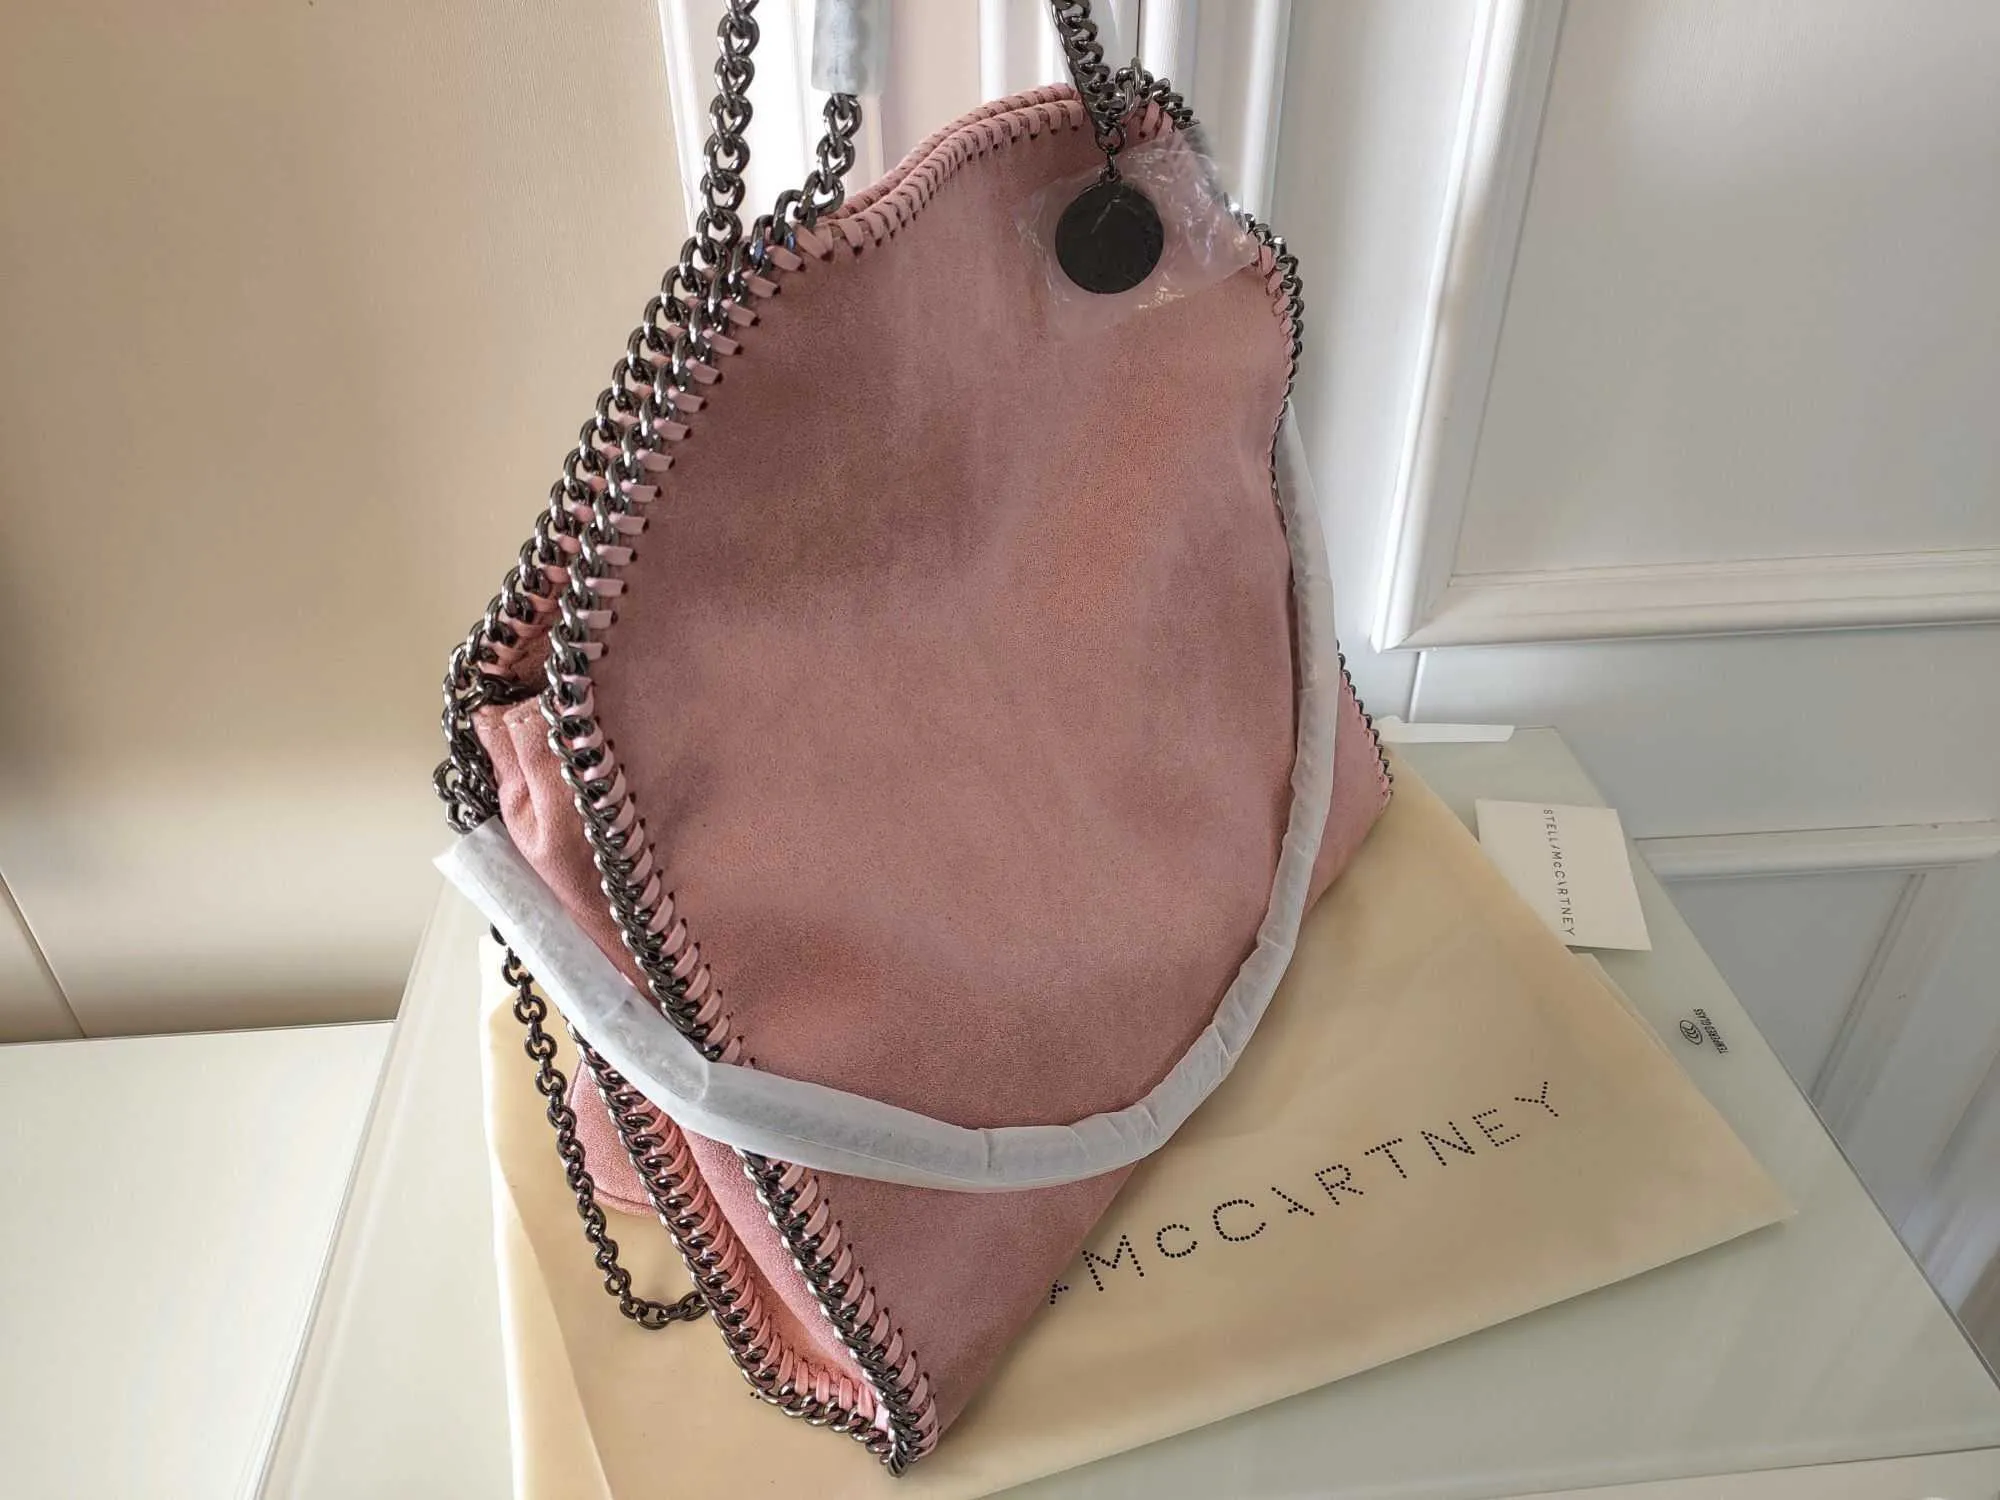 2021 New Fashion women Handbag Stella McCartney PVC high quality leather shopping bag V901-808-808 3 size